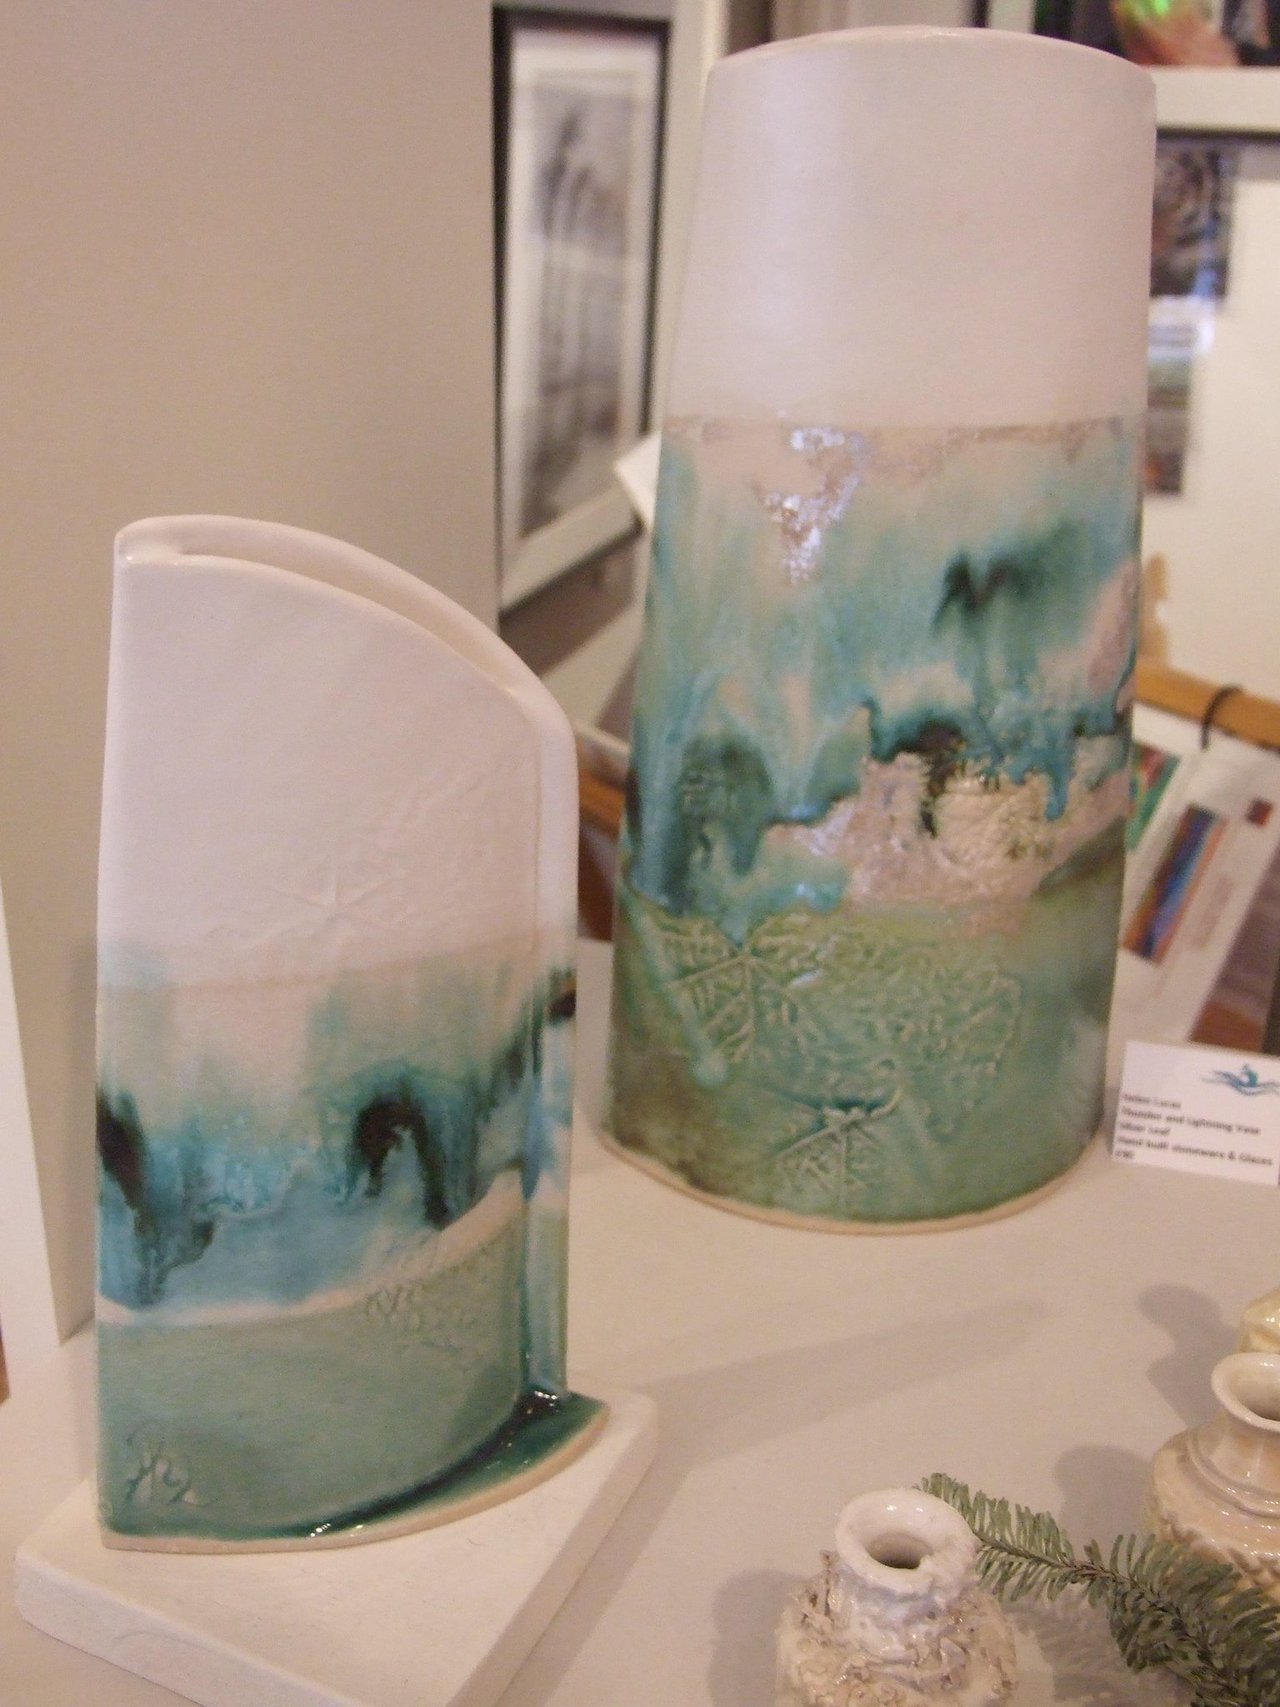 Landscape Horizon Vases #Horizon #landscape #ceramics #design #Brighton #abstract #glaze #vase http://t.co/6ePTp3AnJO